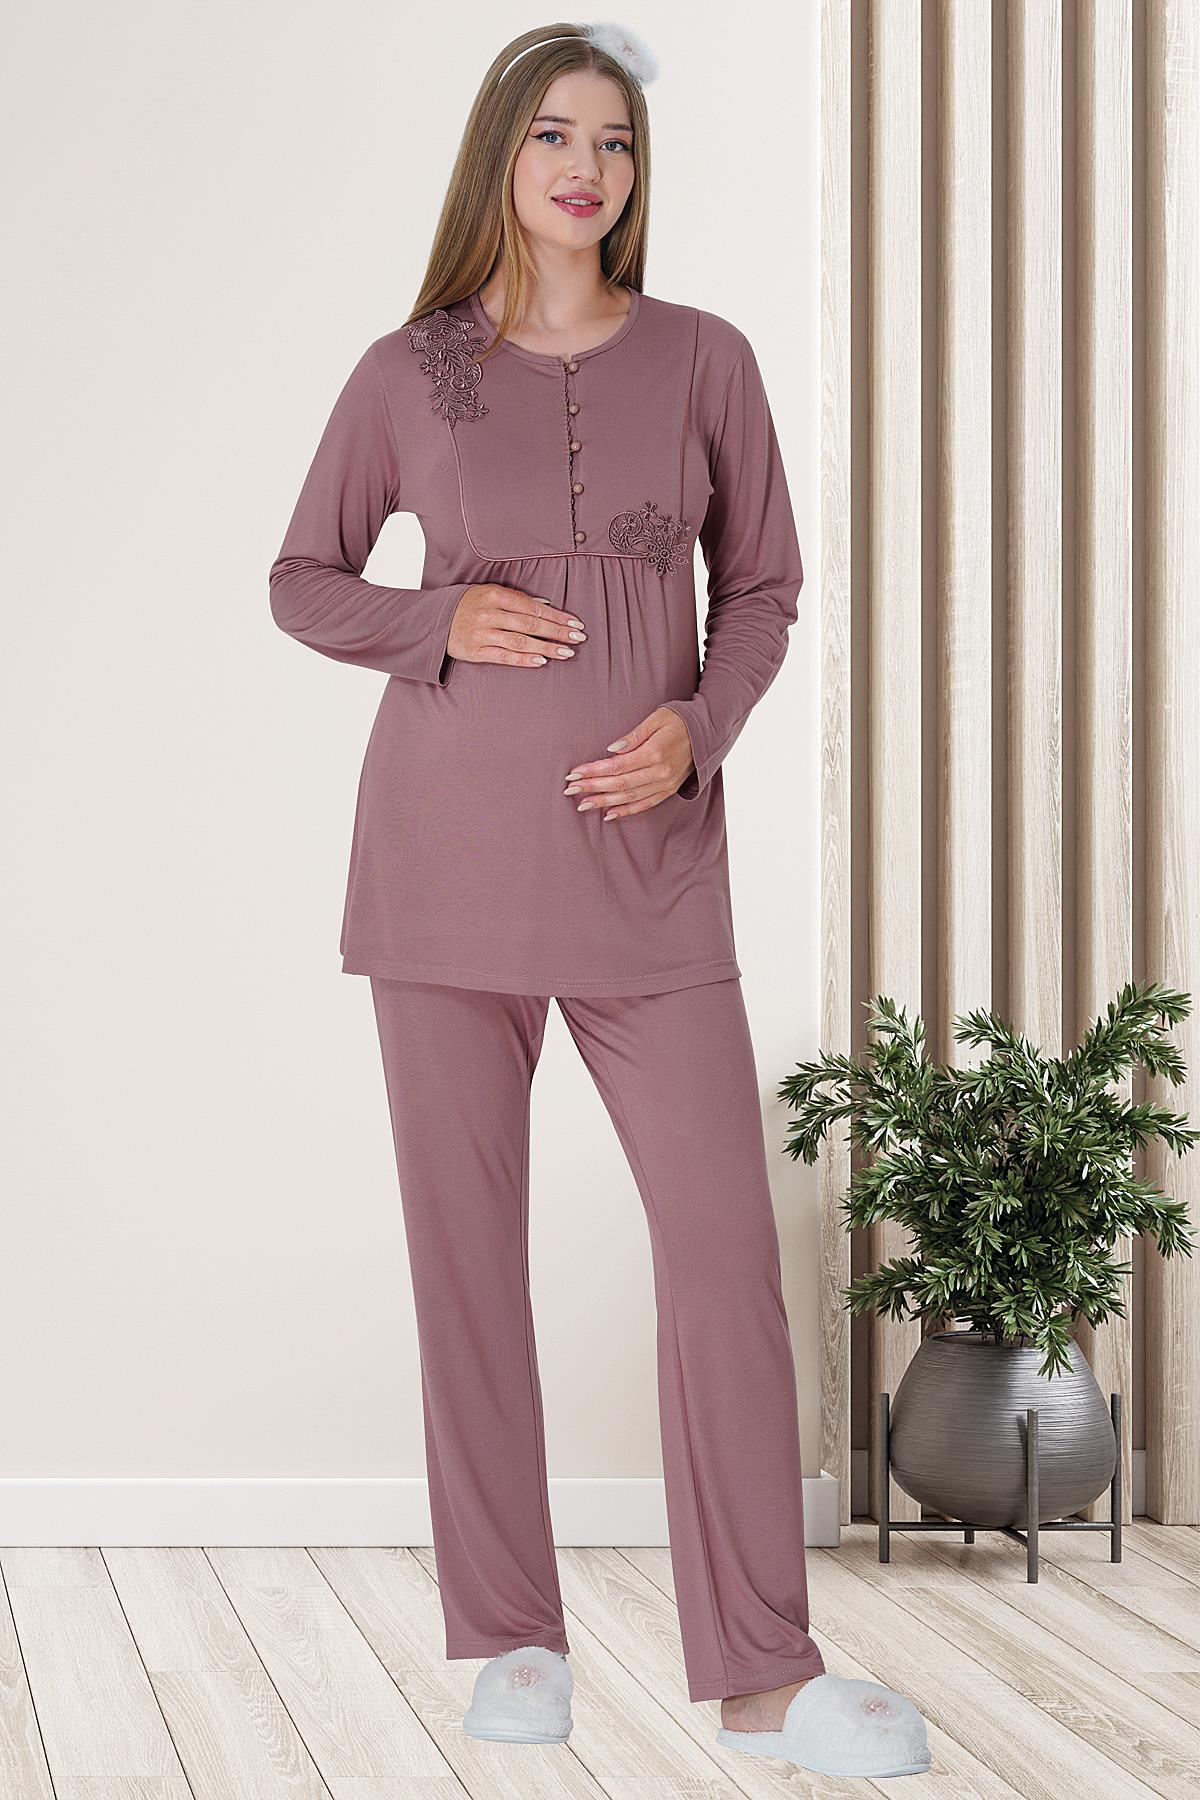 Shopymommy 5828 Embossed Lace Maternity & Nursing Pajamas Dried Rose